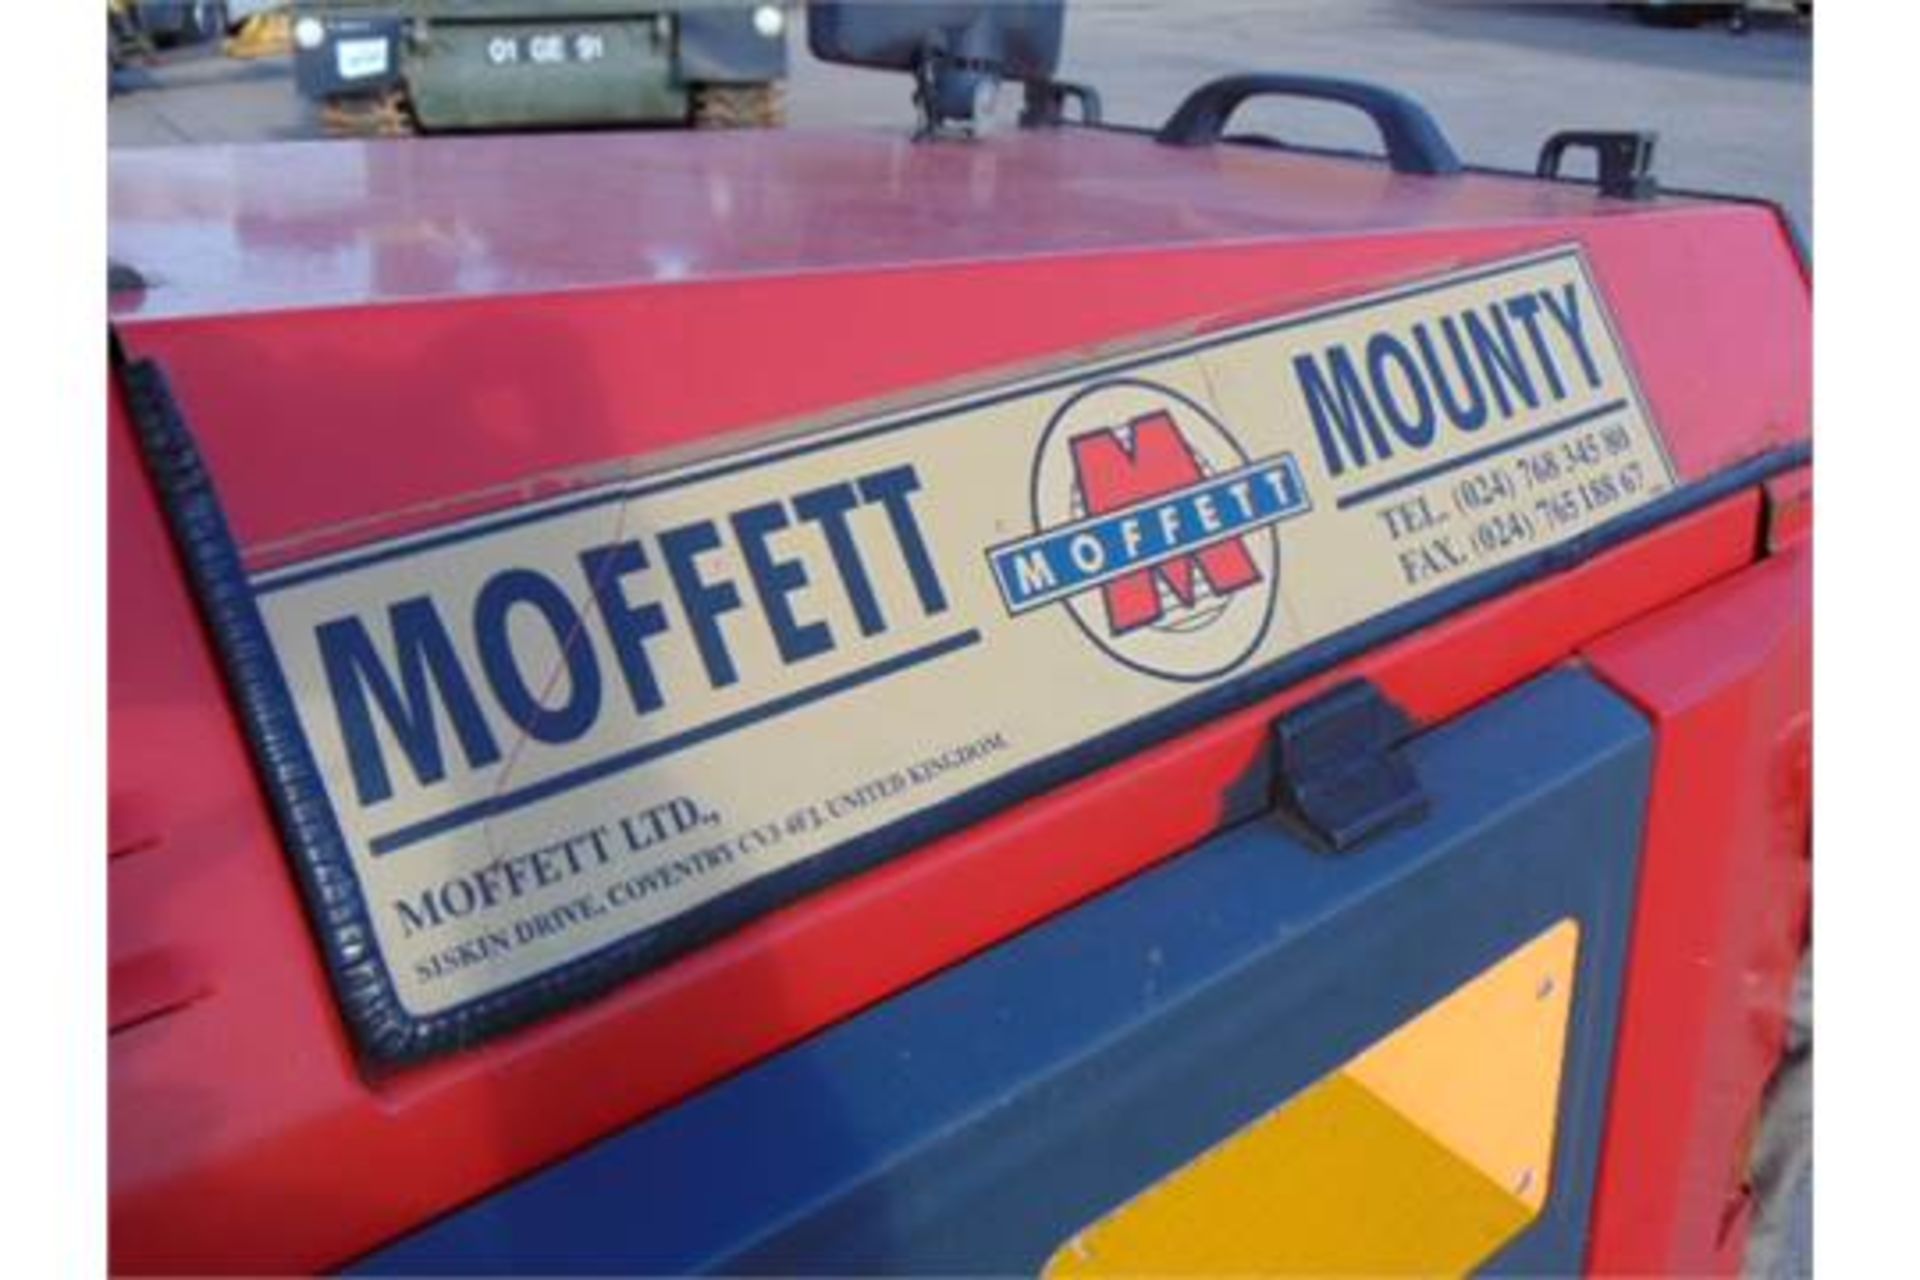 2003 Moffett Mounty M2003 Truck Mounted Forklift - Image 21 of 23